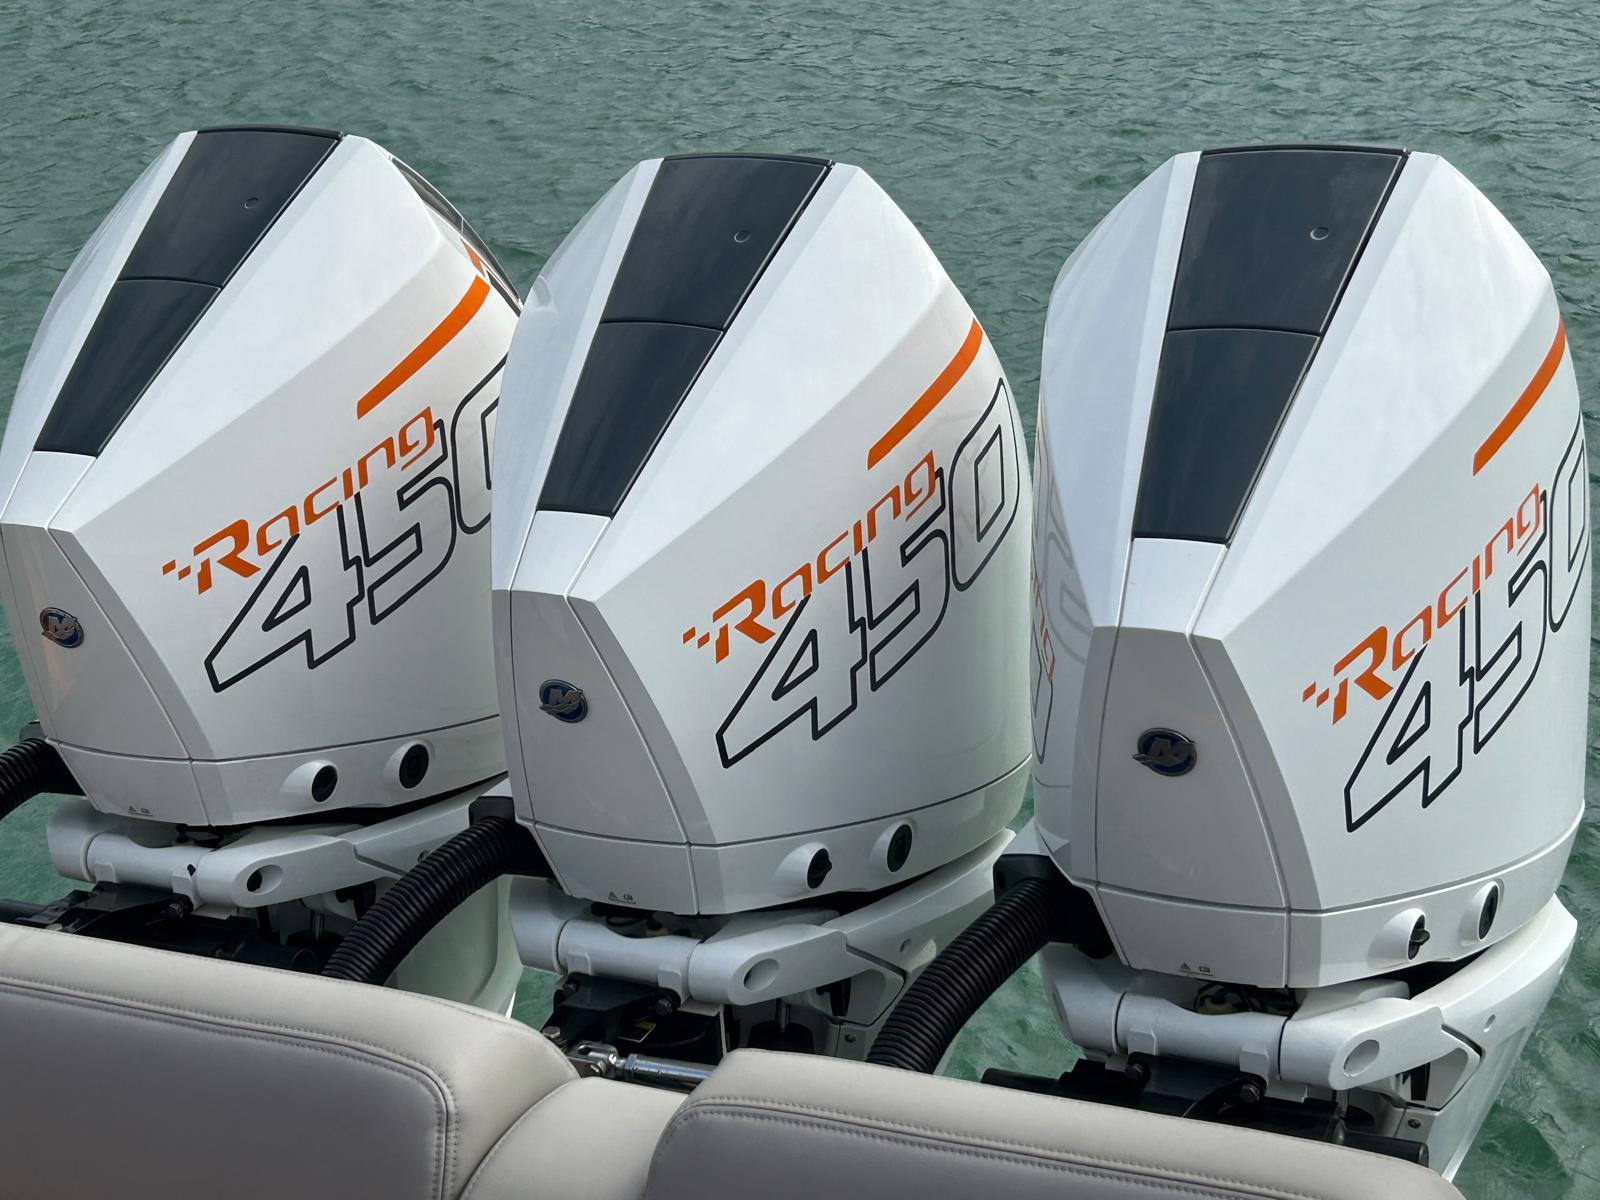 2022 Mystic Powerboats m3800